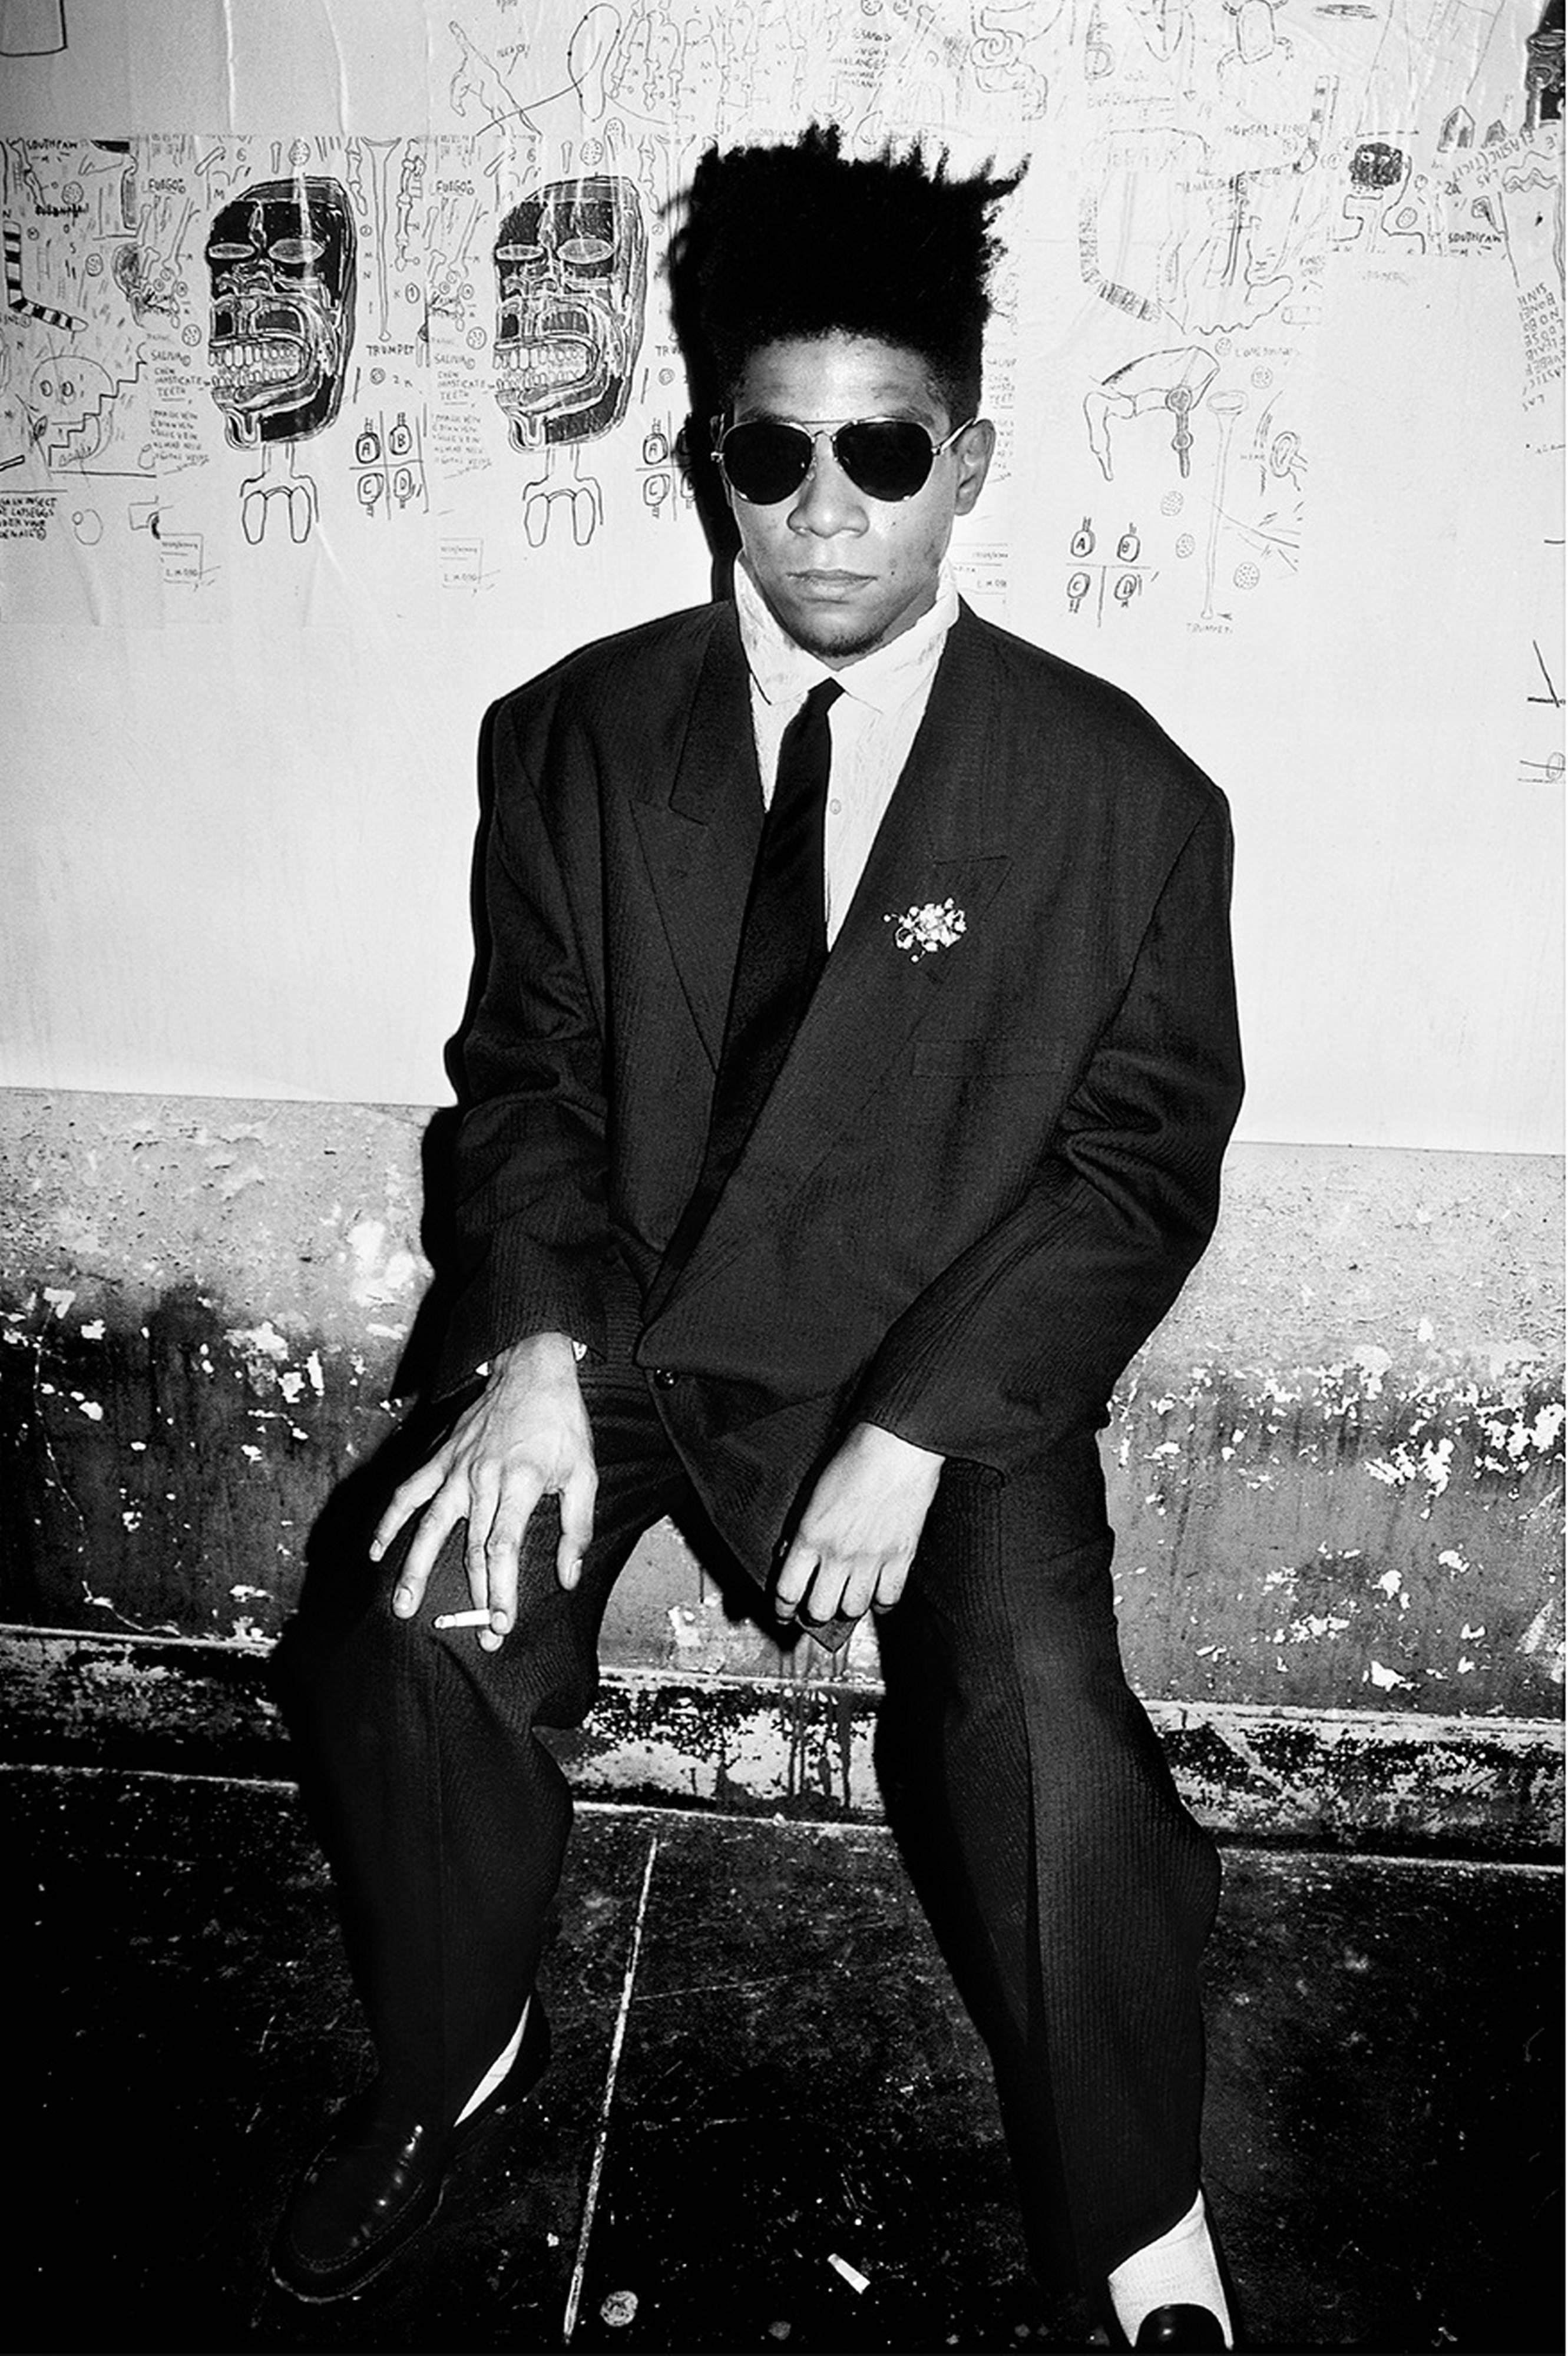 Roxanne Lowit Black and White Photograph - Jean-Michel Basquiat